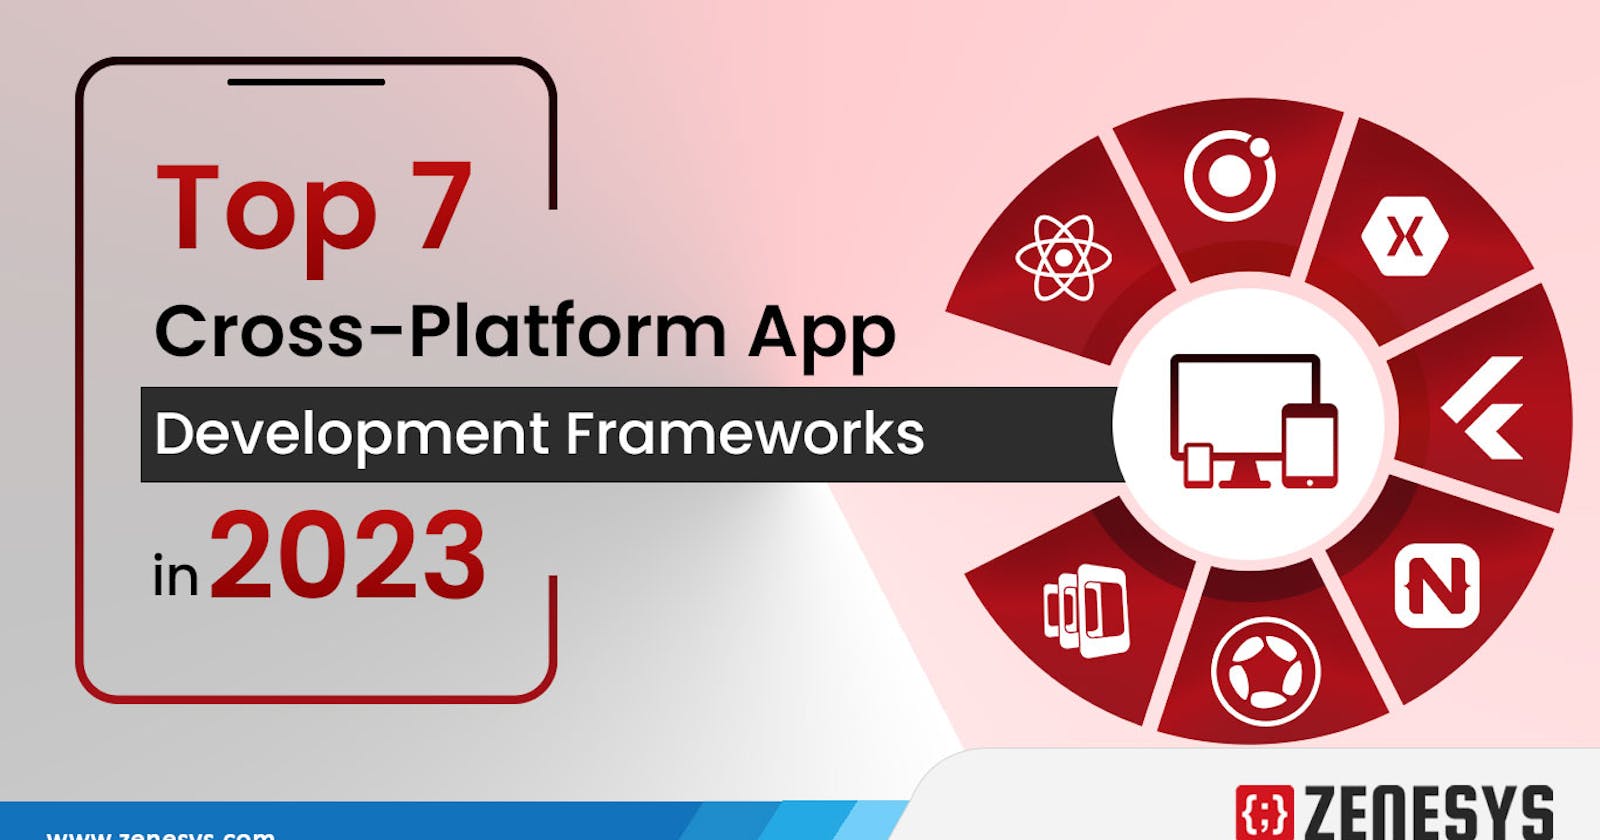 Top 7 Cross-Platform App Development Frameworks in 2023